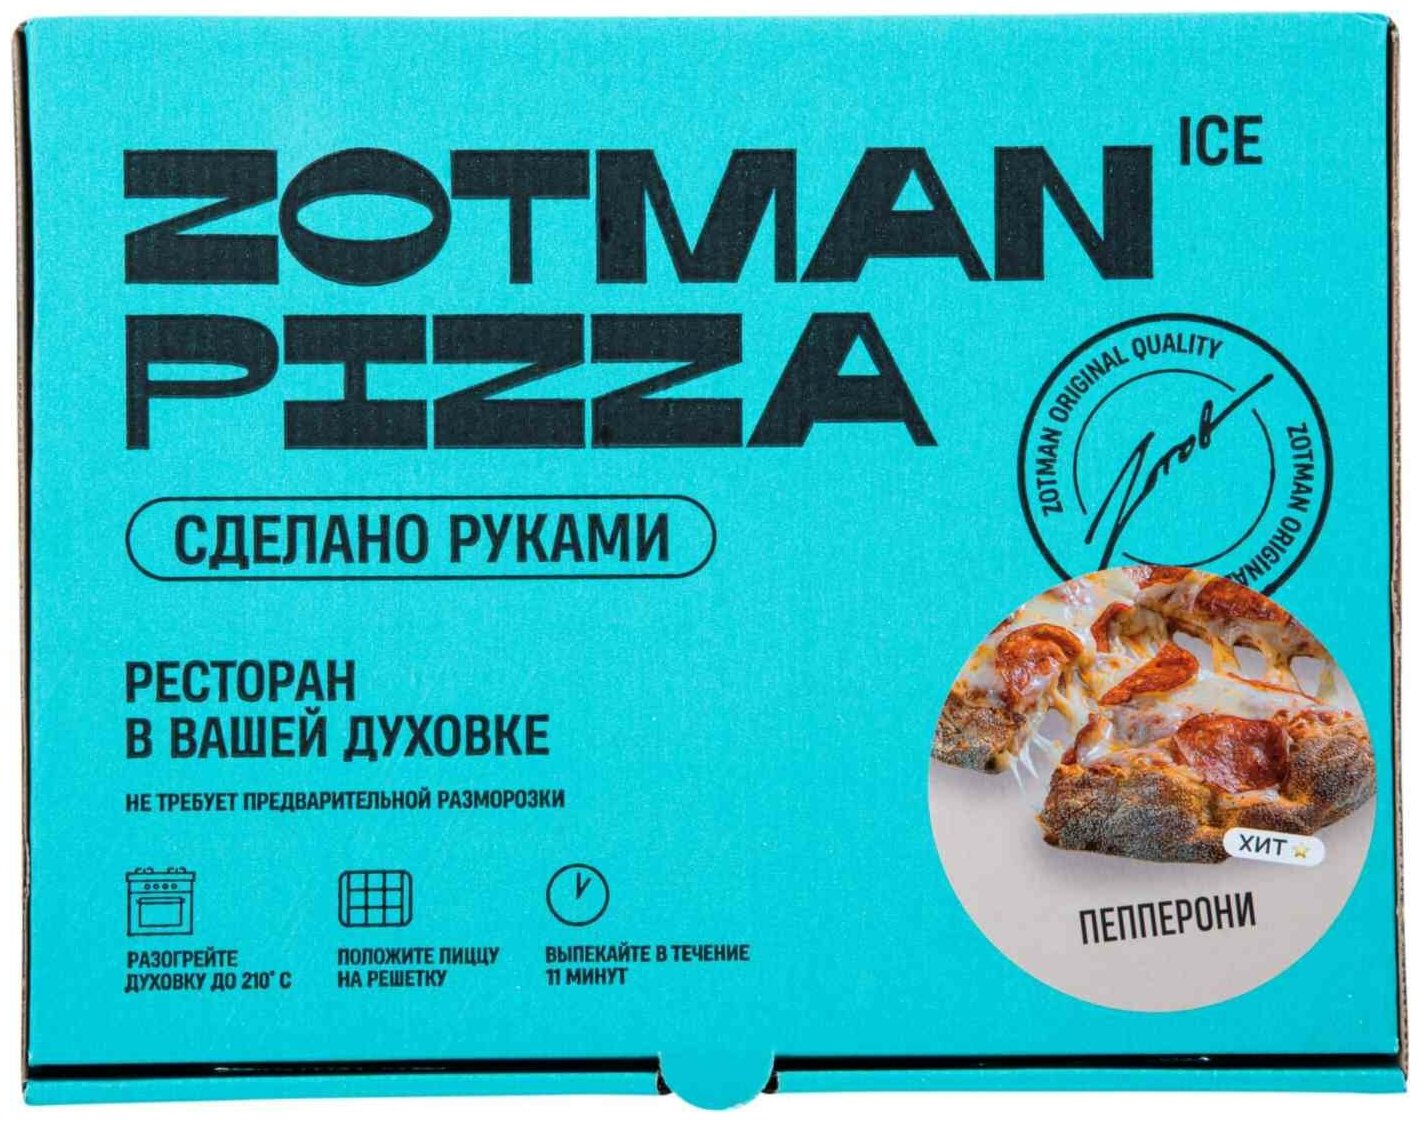 сколько стоит пицца пепперони в москве фото 84